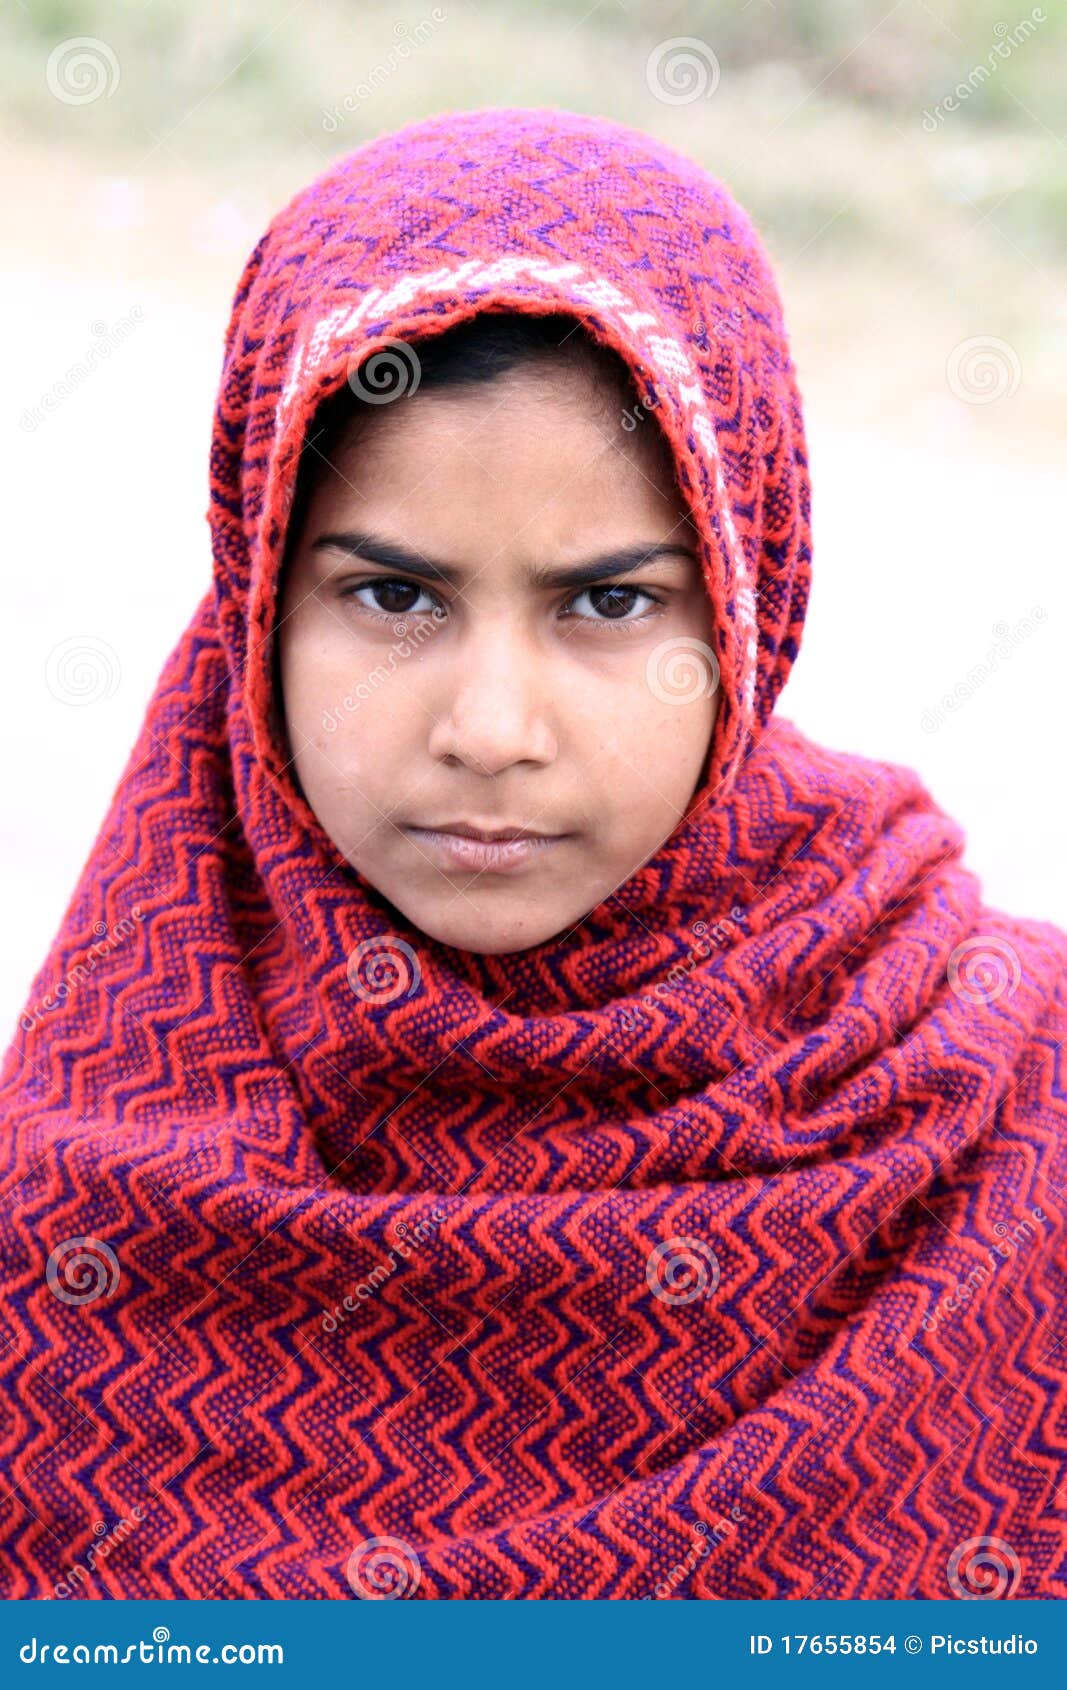 girl-red-shawl-afghanistan_S001213_-1.jpeg